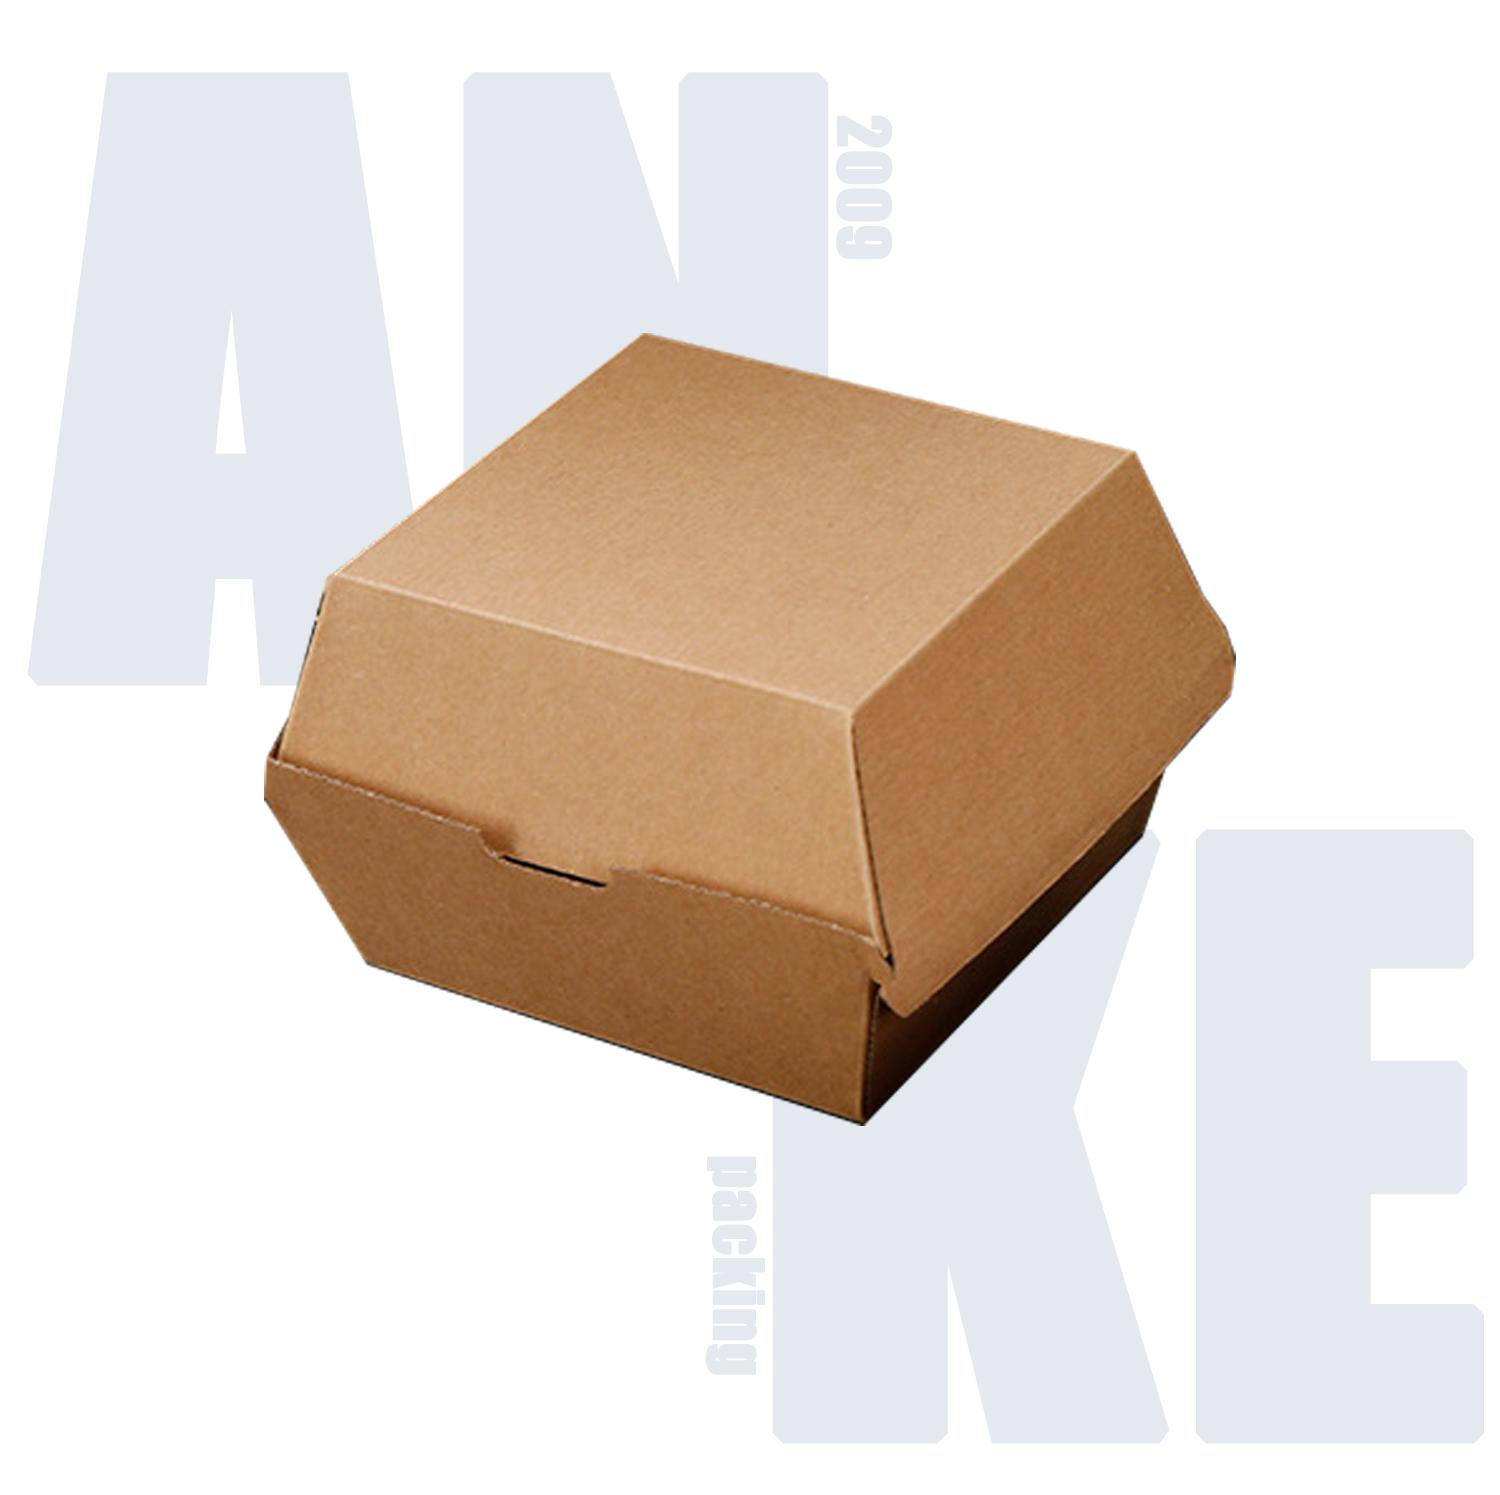 नालीदार बर्गर बॉक्स